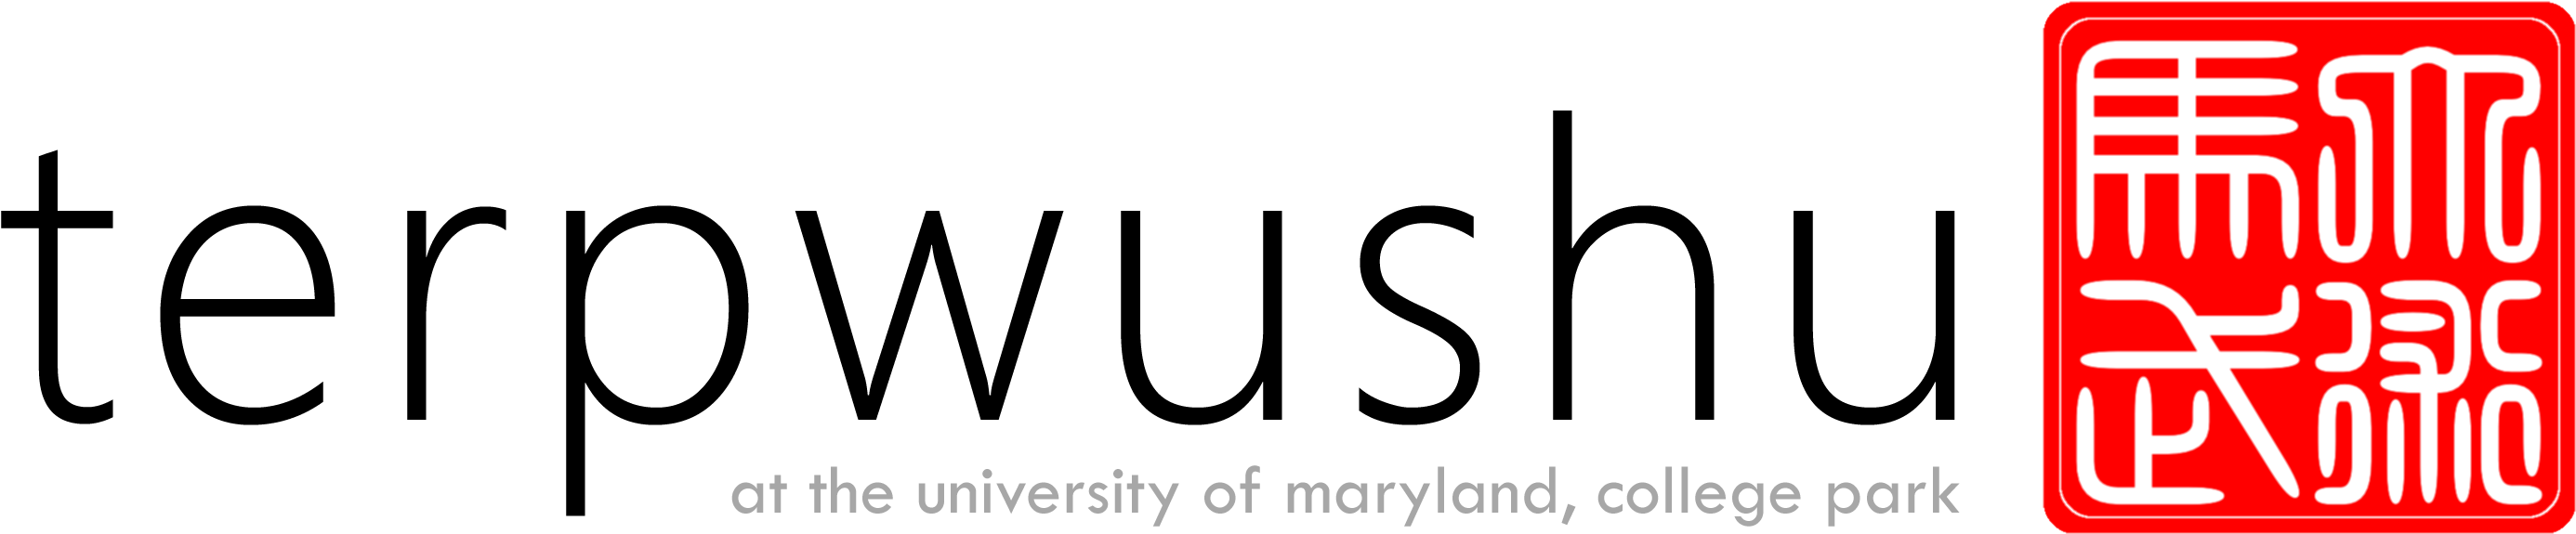 University Of Maryland College Park Sports Logo (2900x640)